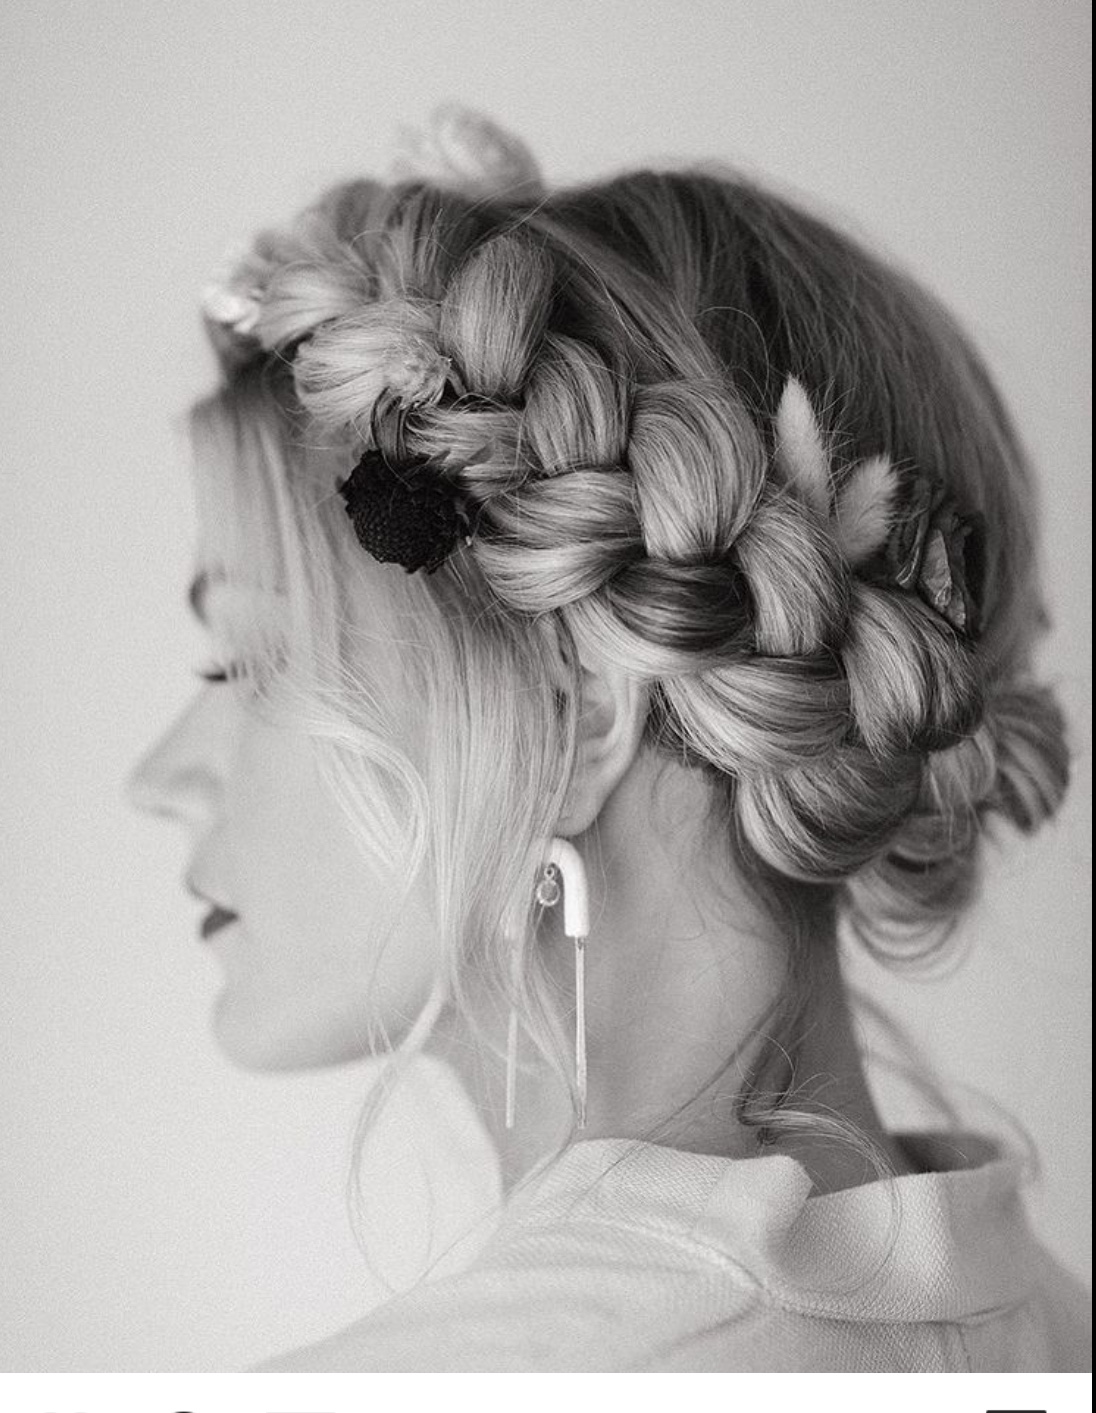 braided wedding hairstyles